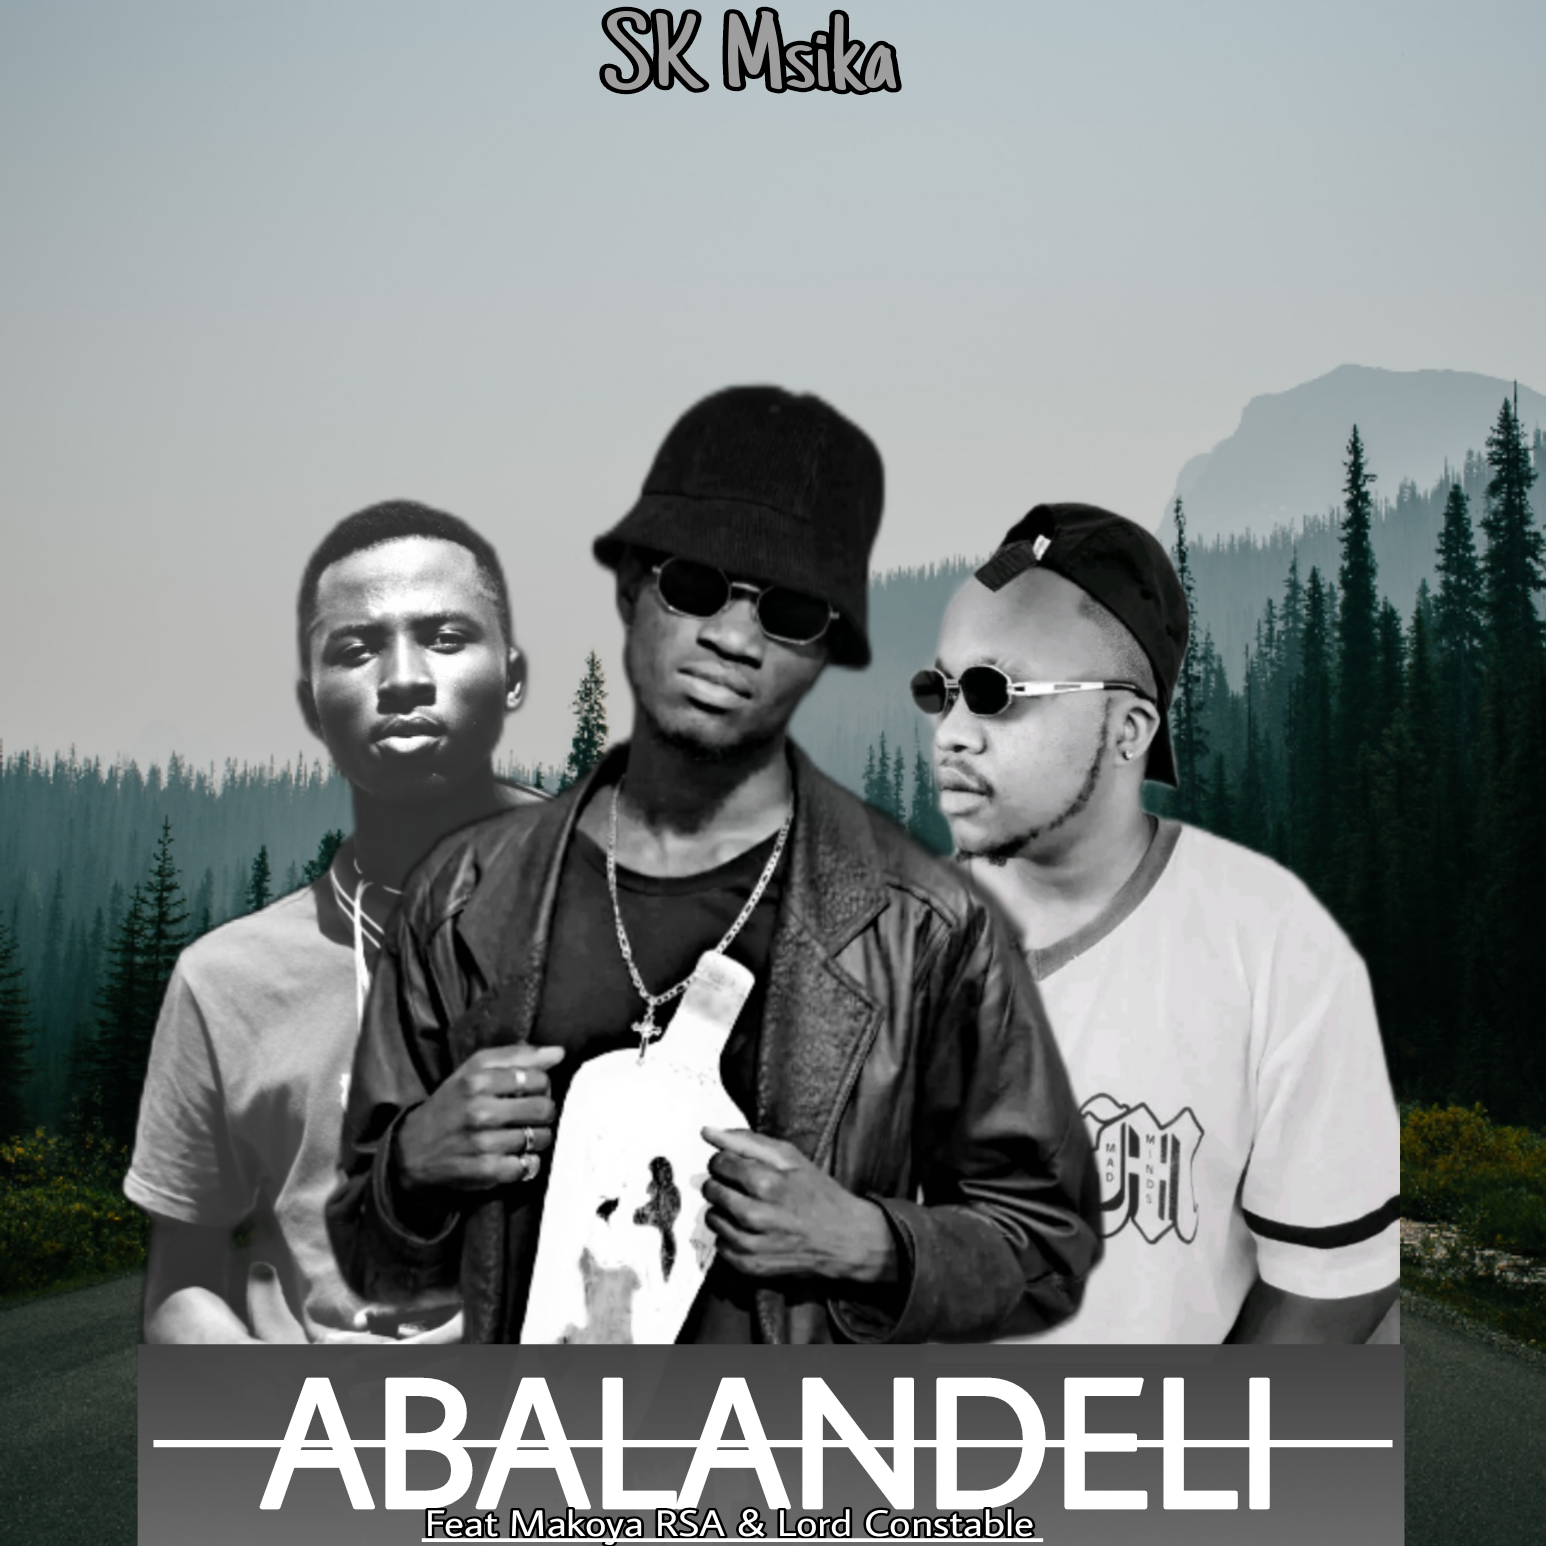 ABALANDELI (Feat Lord Constable & Makoya Rsa) - SK Msika